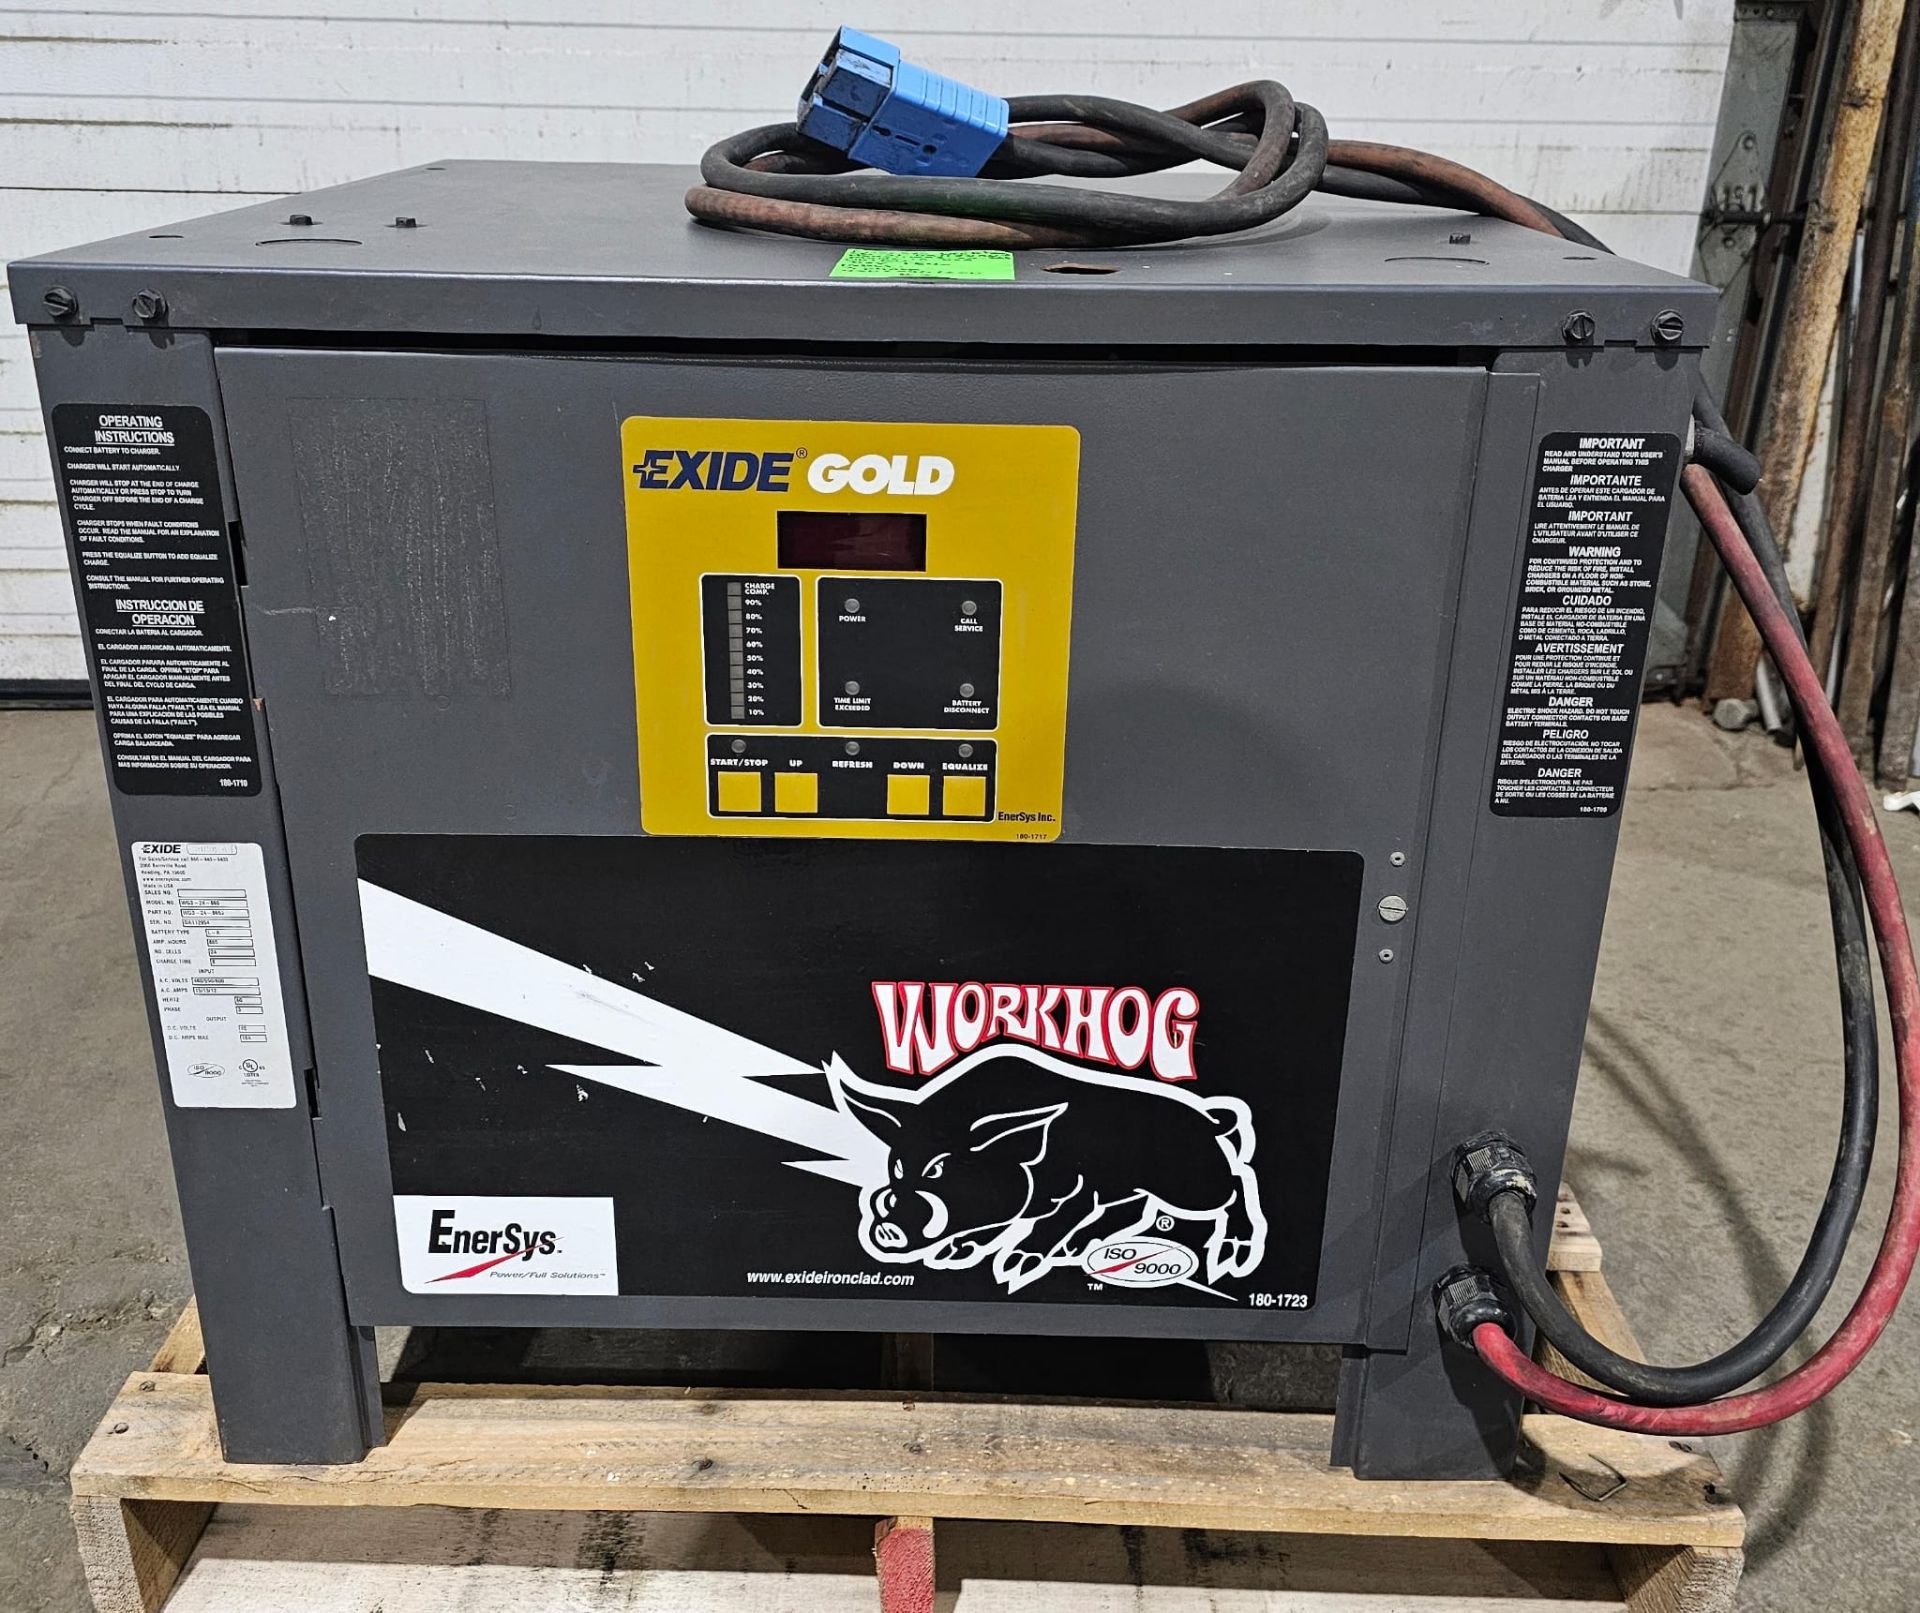 Enersys Workhog Forklift Battery Charger Model: wg3-24-865 - Made in USA - Output: 48V 3 phase 480 / - Bild 2 aus 4